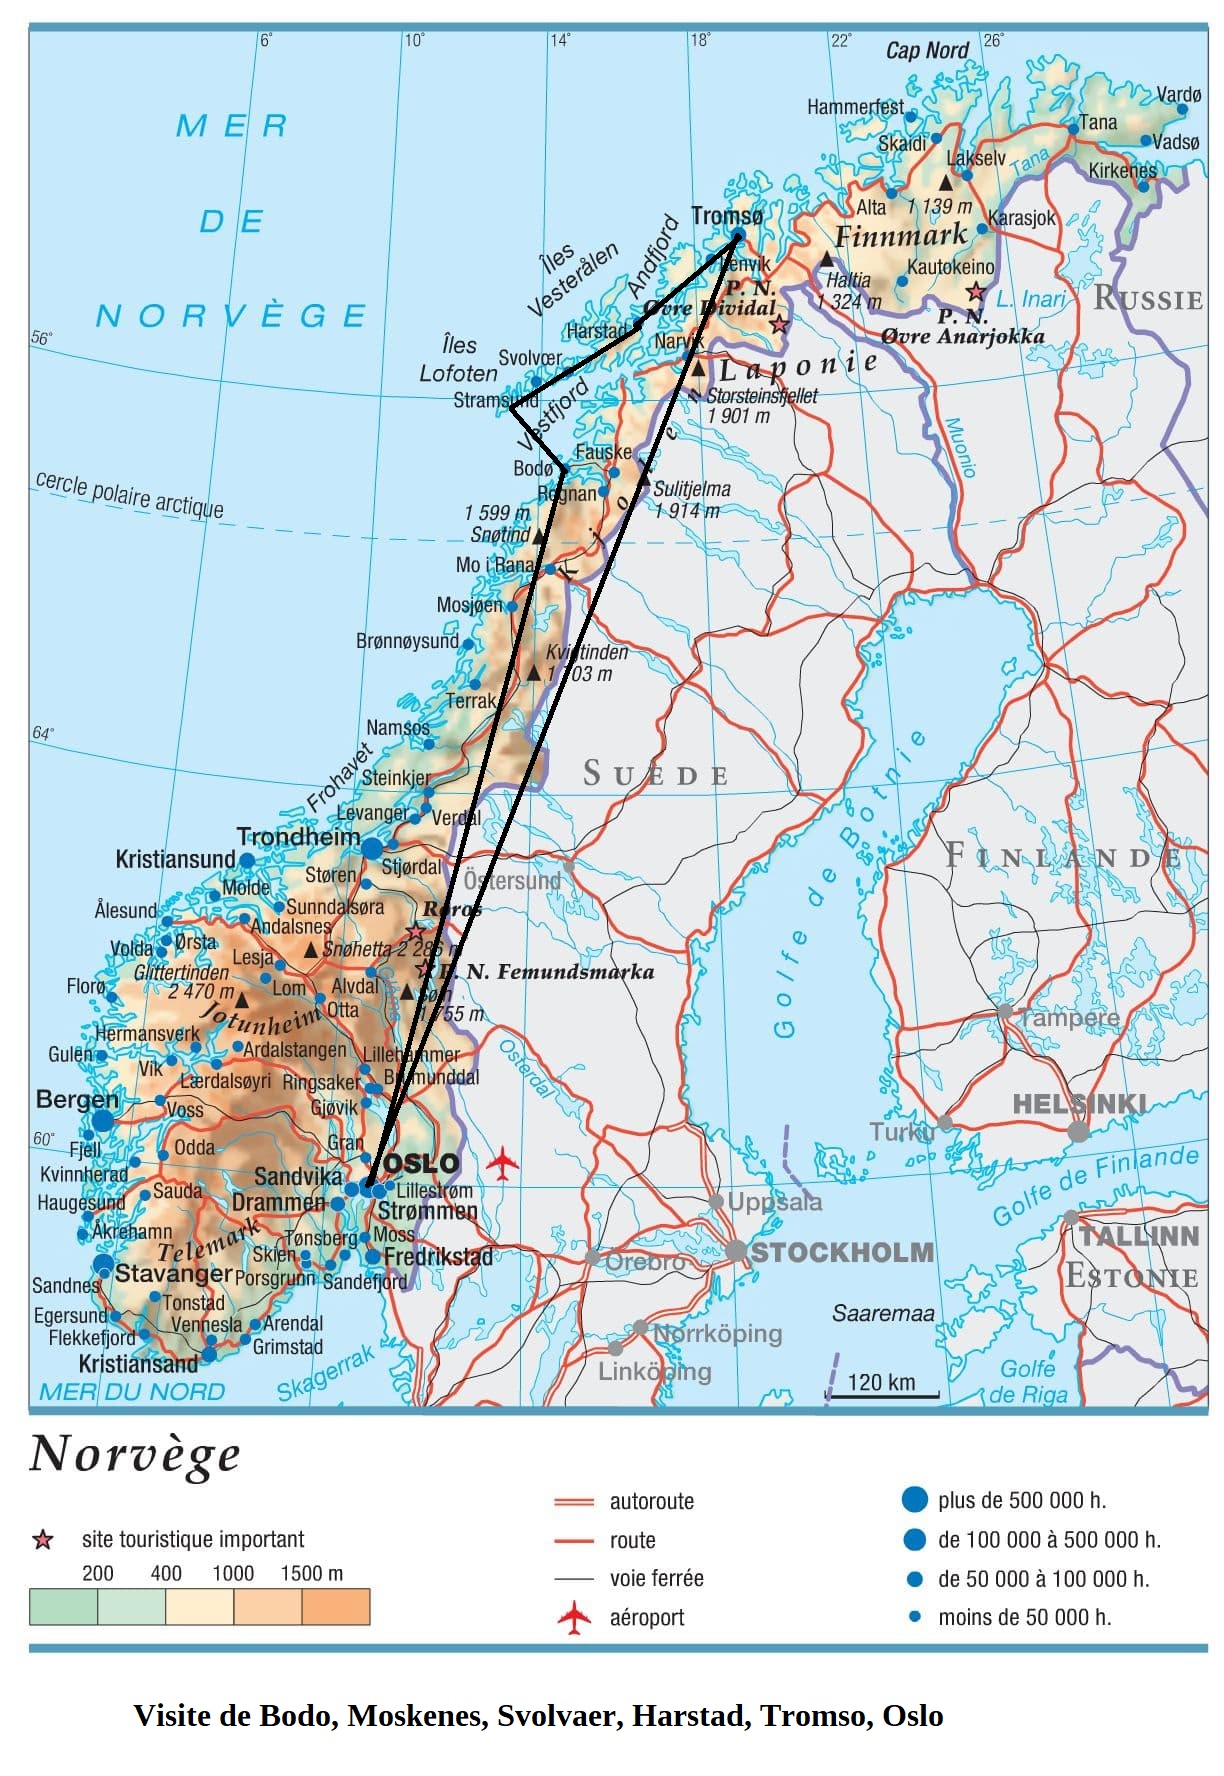  Visite de Bodo, Moskenes, Svolvaer, Harstad, Tromso et Oslo !  